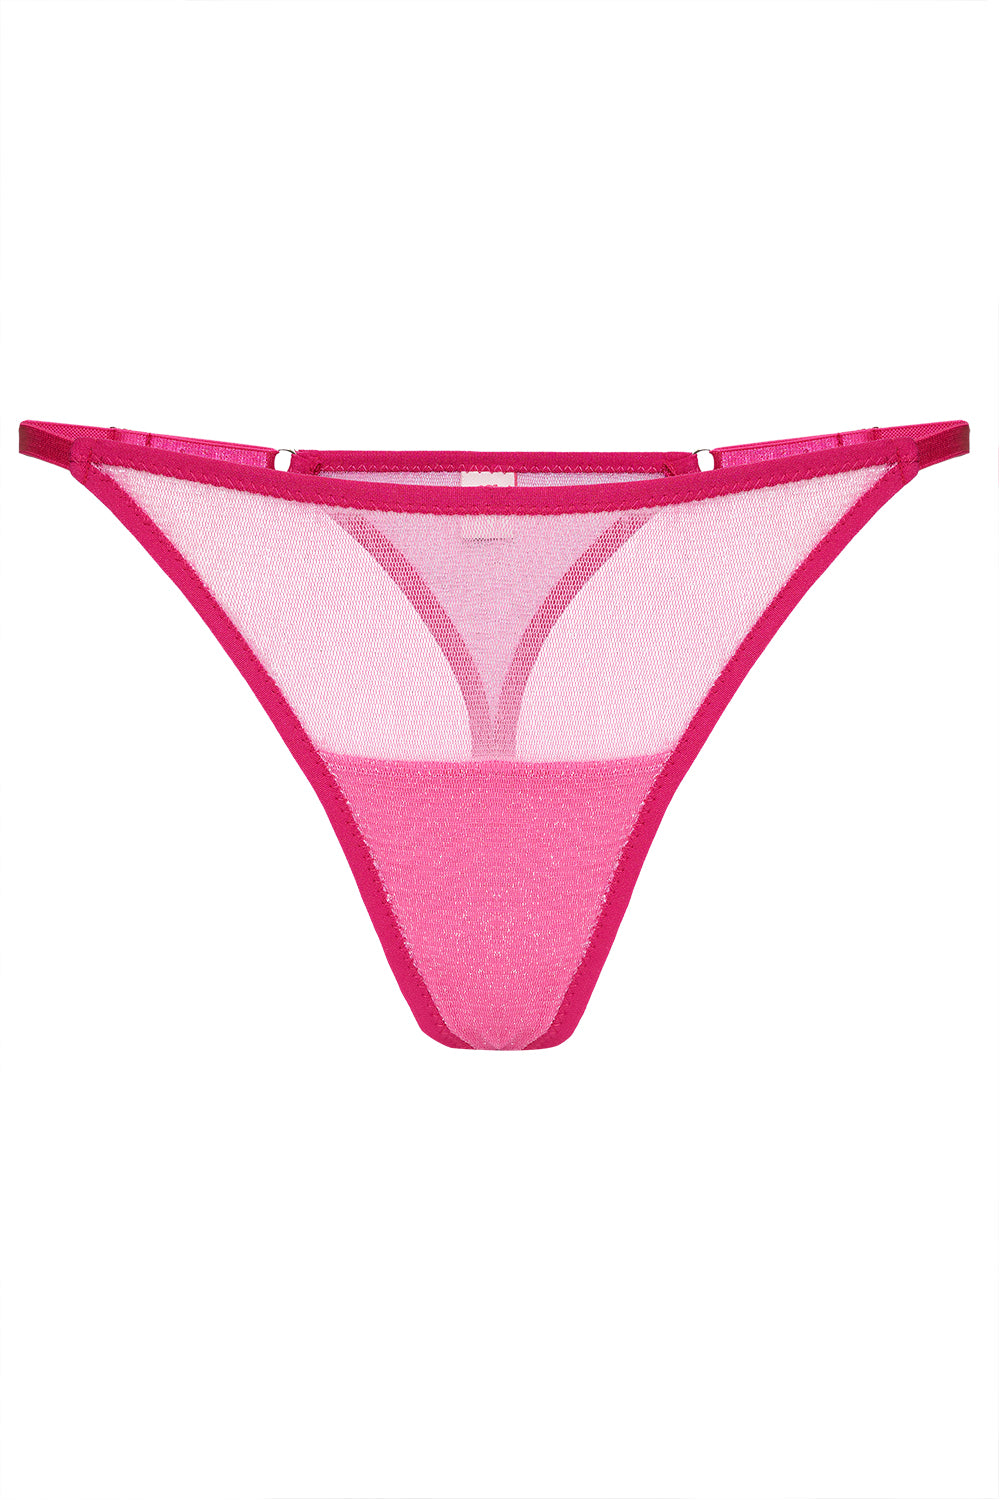 Wildly Pink ultra thongs